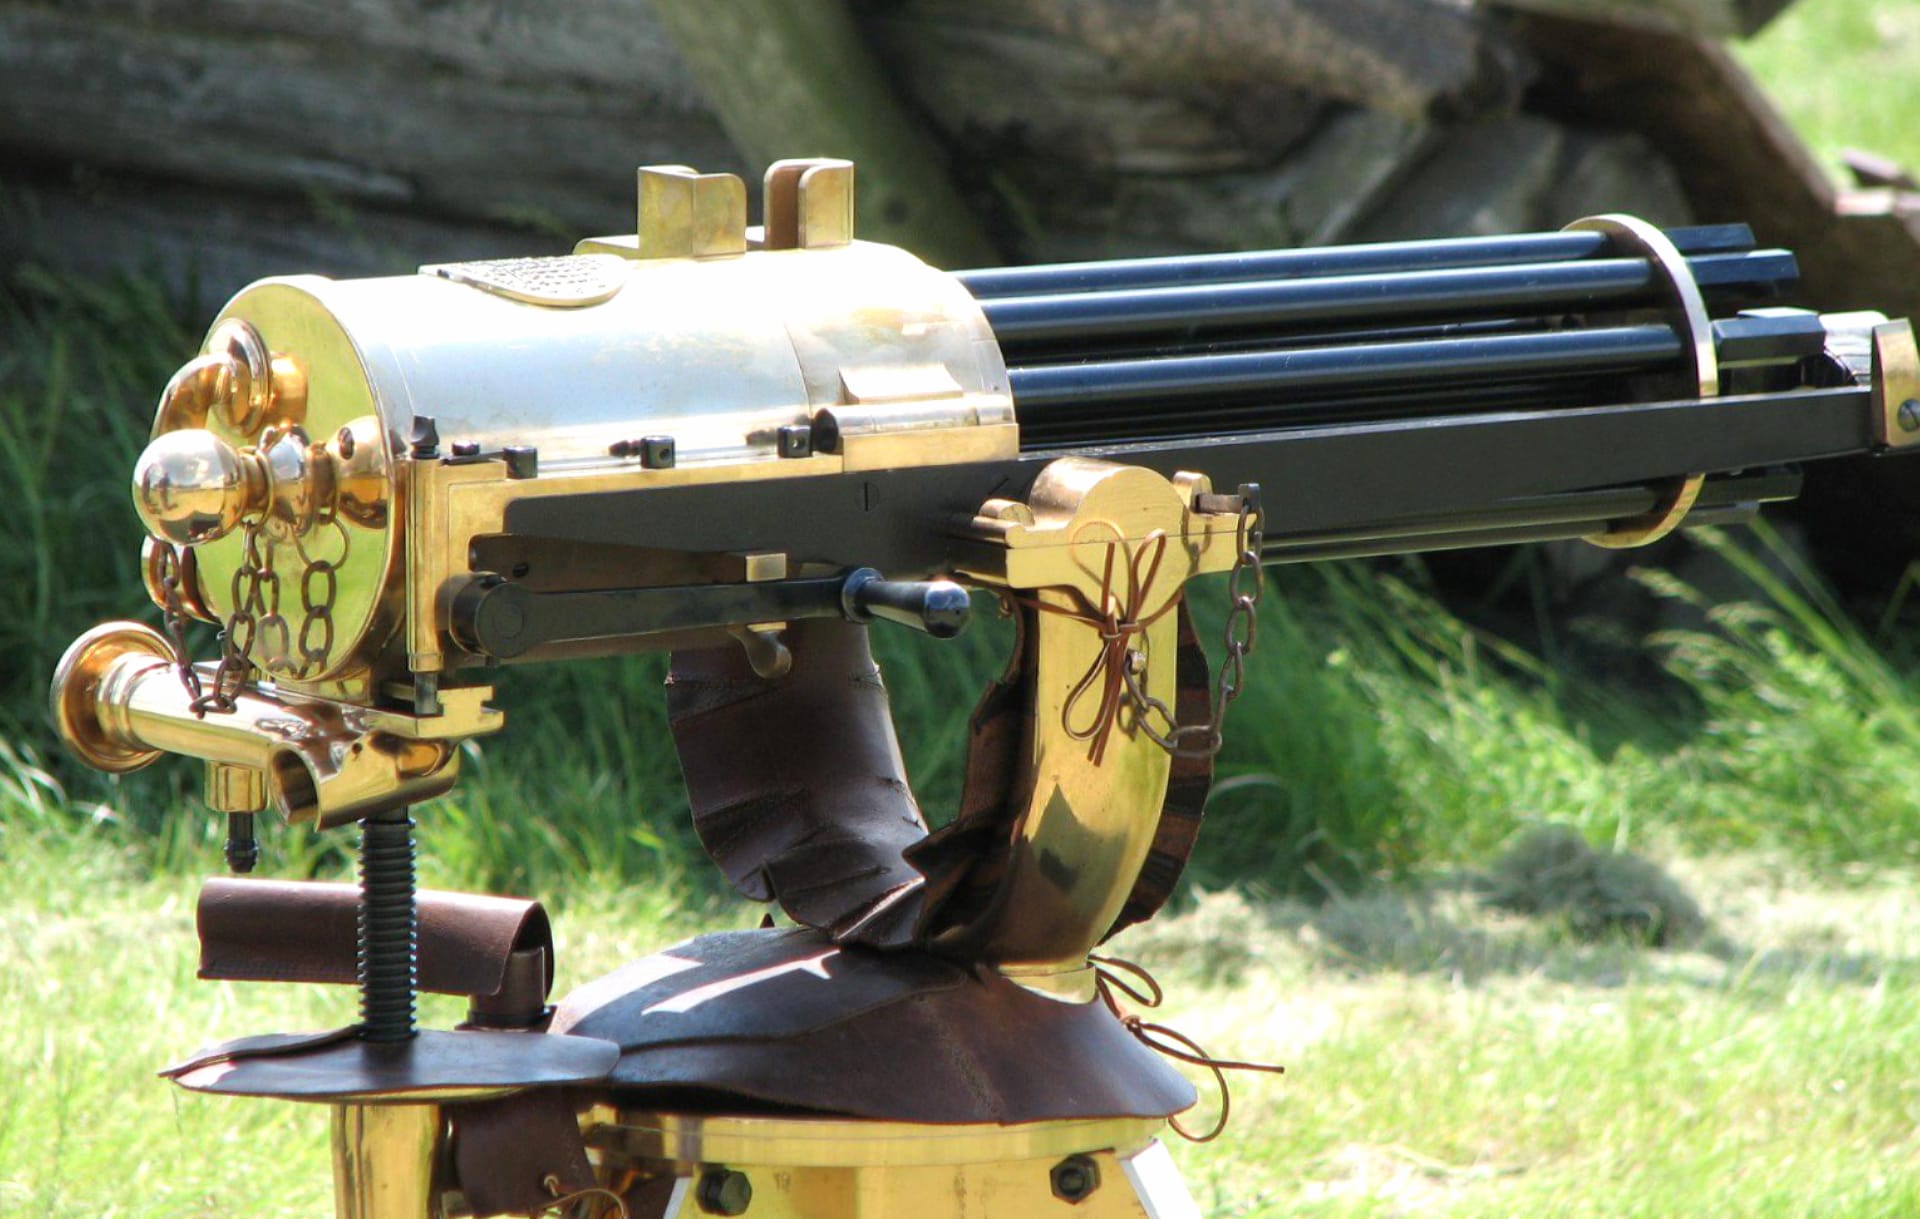 1874 Gatling gun at 1024 x 1024 iPad size wallpapers HD quality